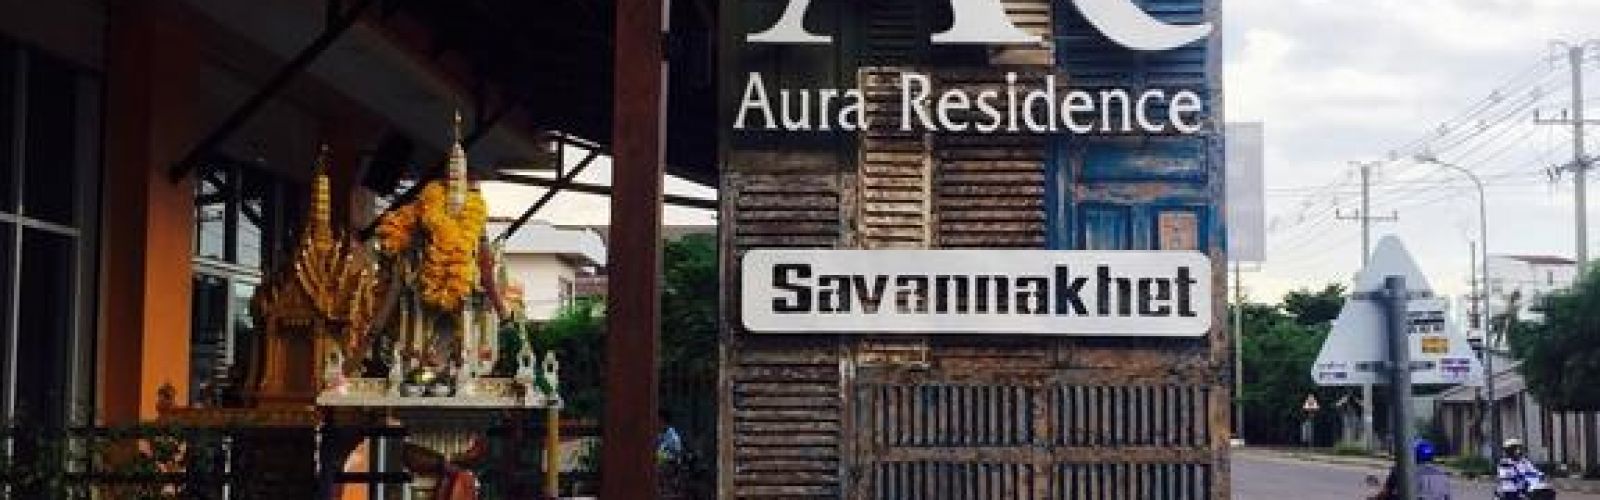 Aura Residence Hotel